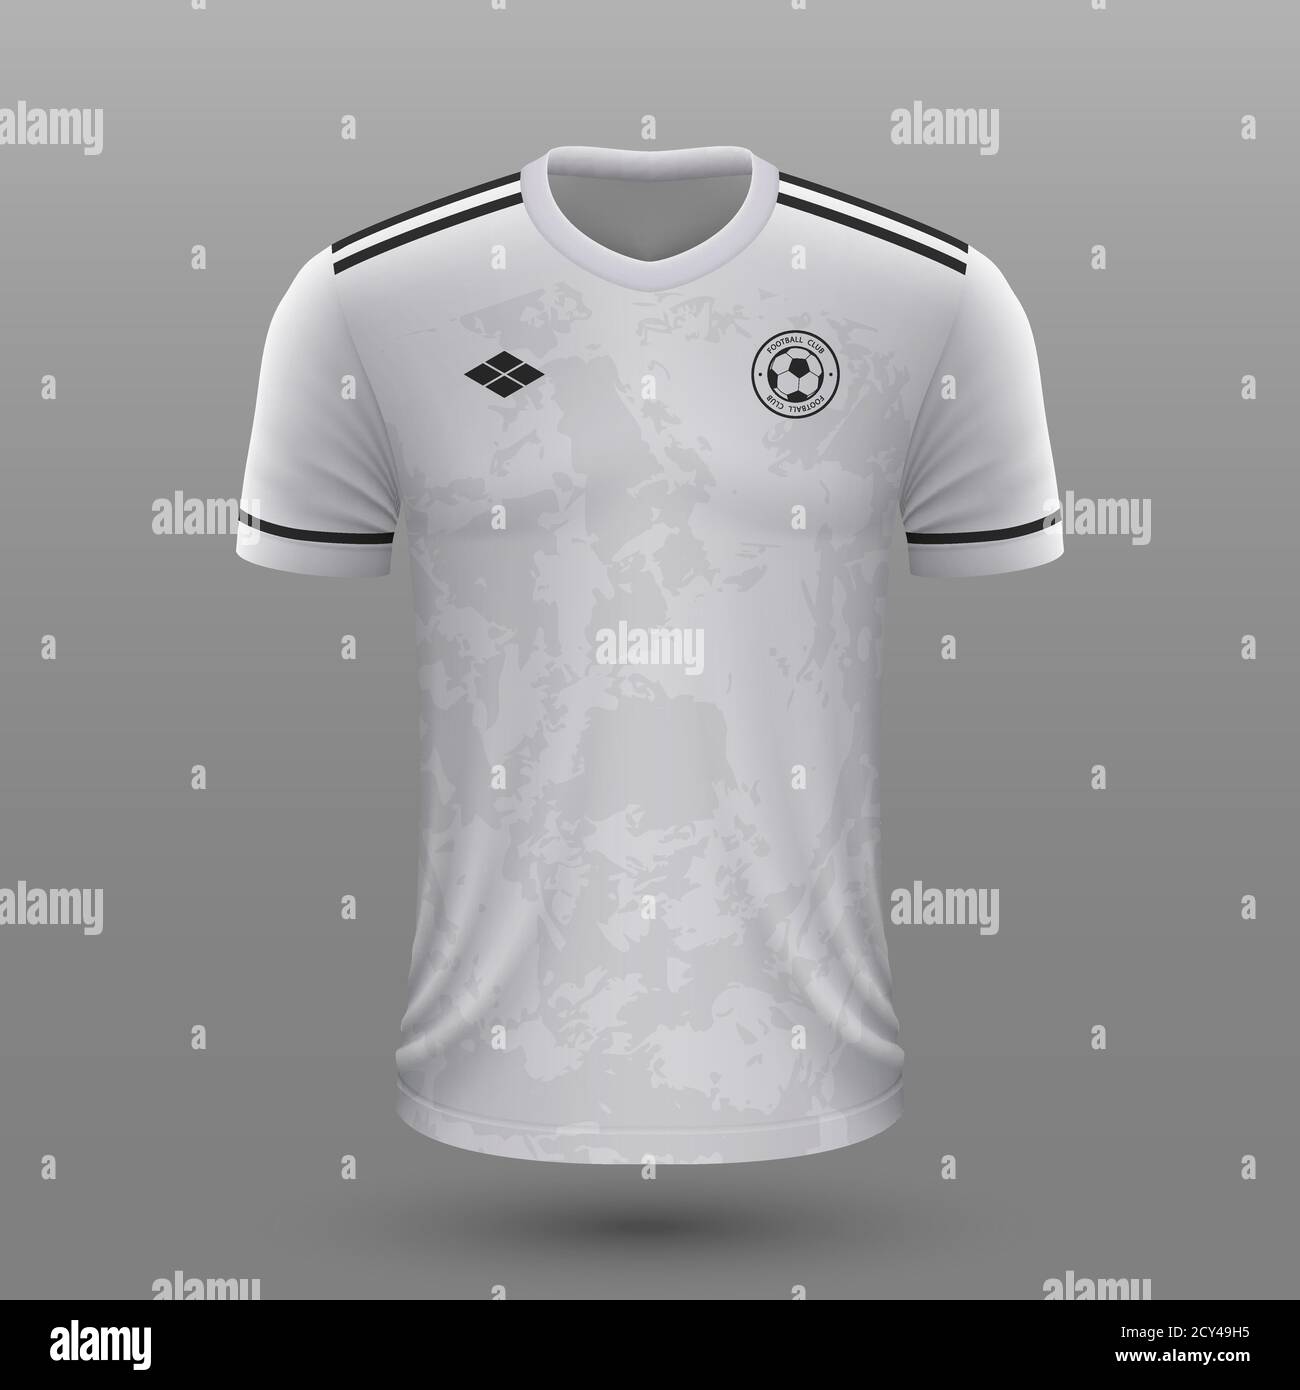 Realistic soccer shirt 2020, Bosnia home jersey template for football kit  Stock Vector Image & Art - Alamy